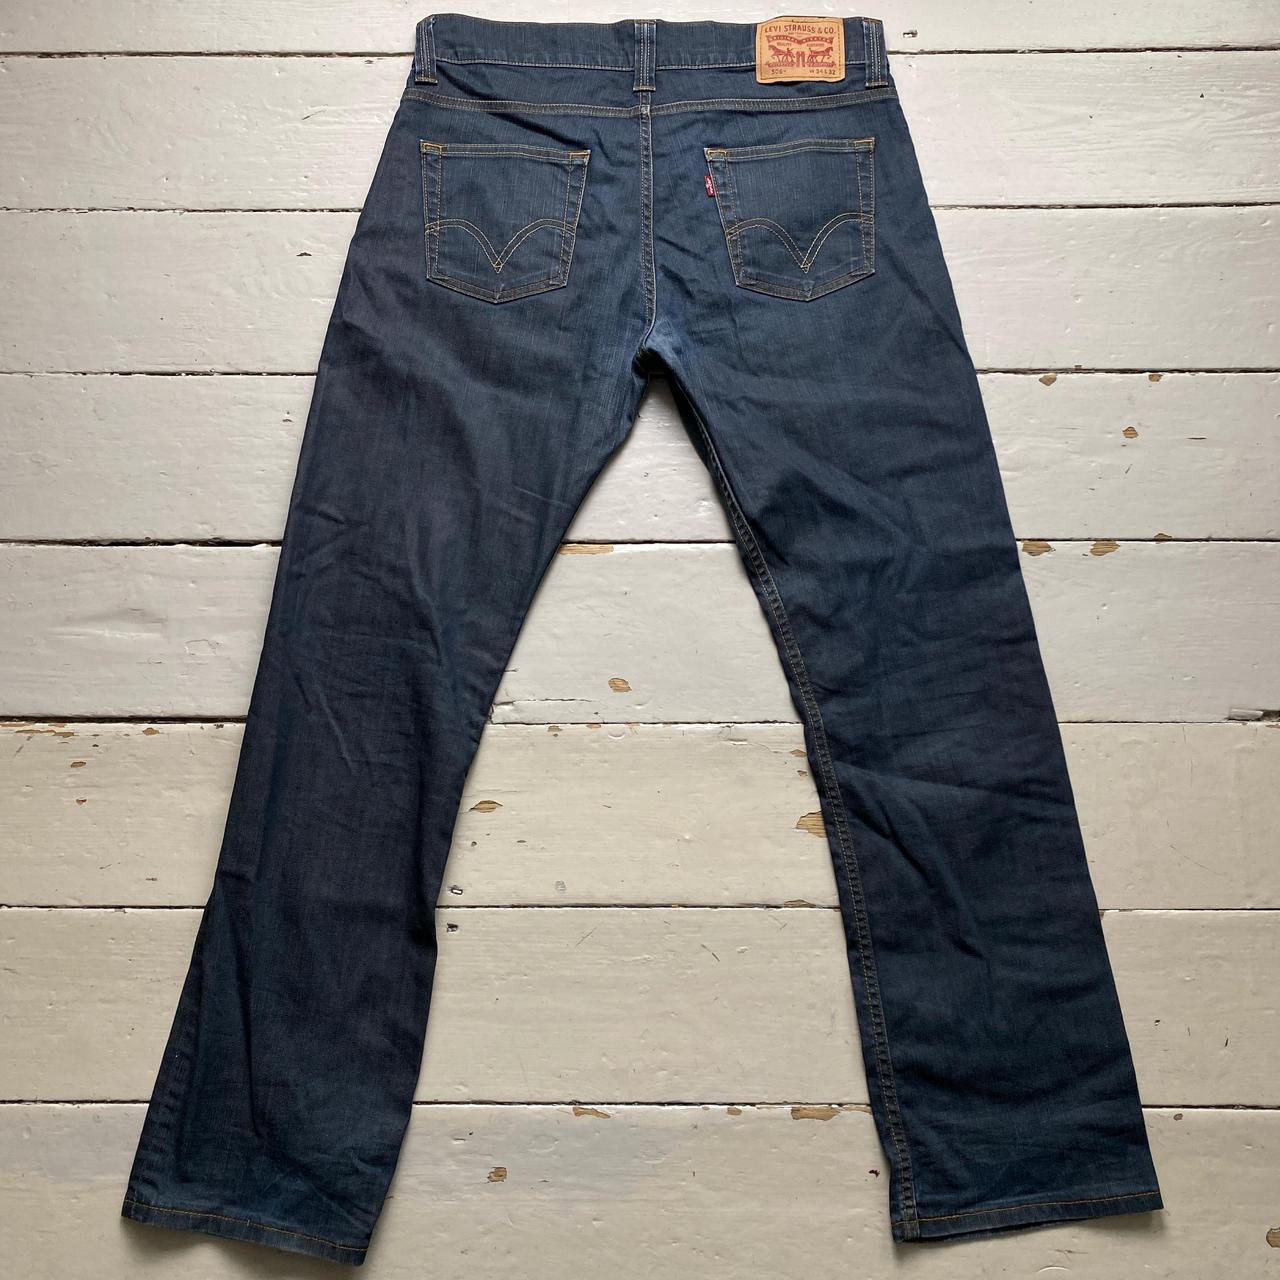 Levis 506 Baggy Navy Jeans